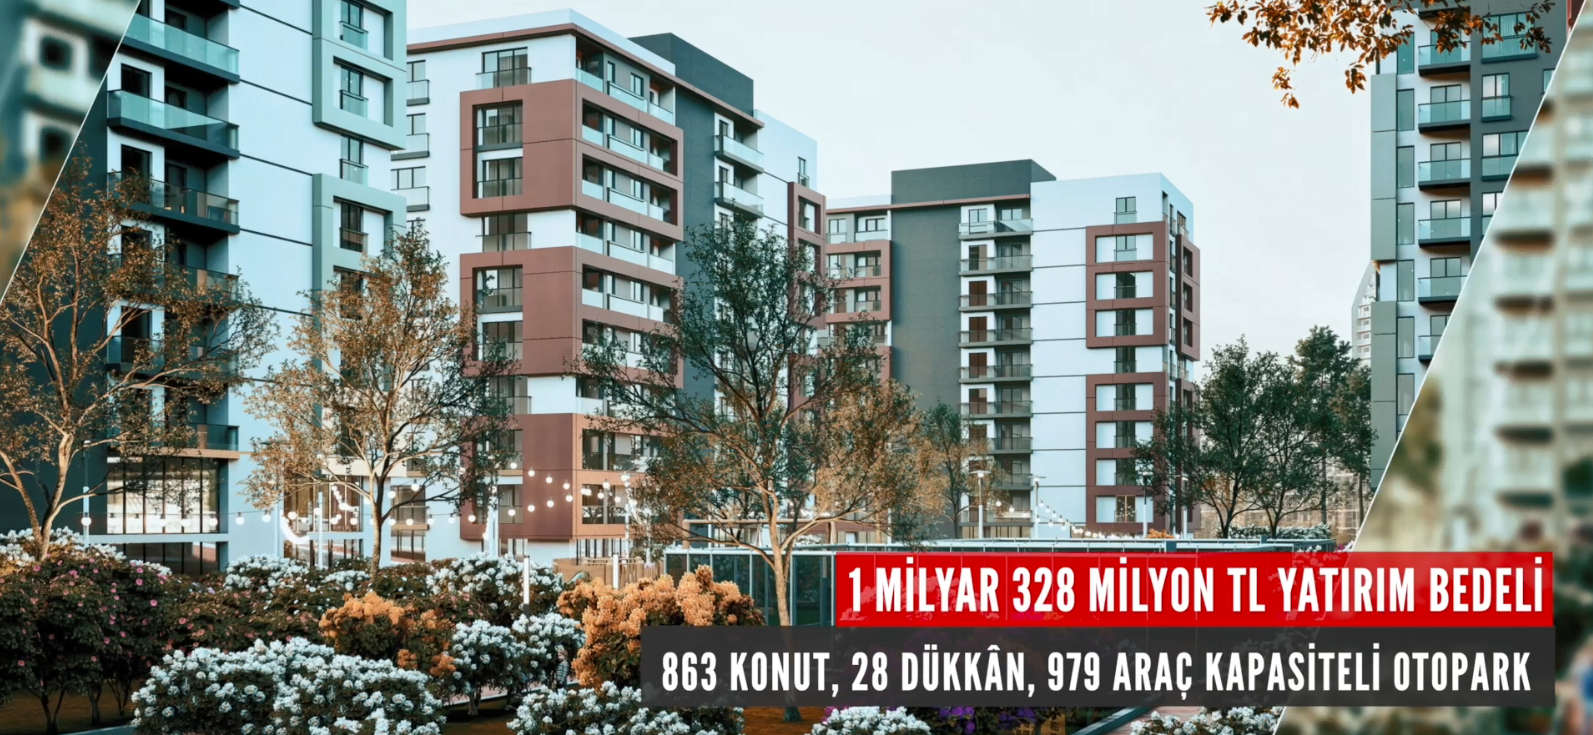 İstanbul Gaziosmanpaşa Kentsel Dönüşüm Temel Atma Filmi